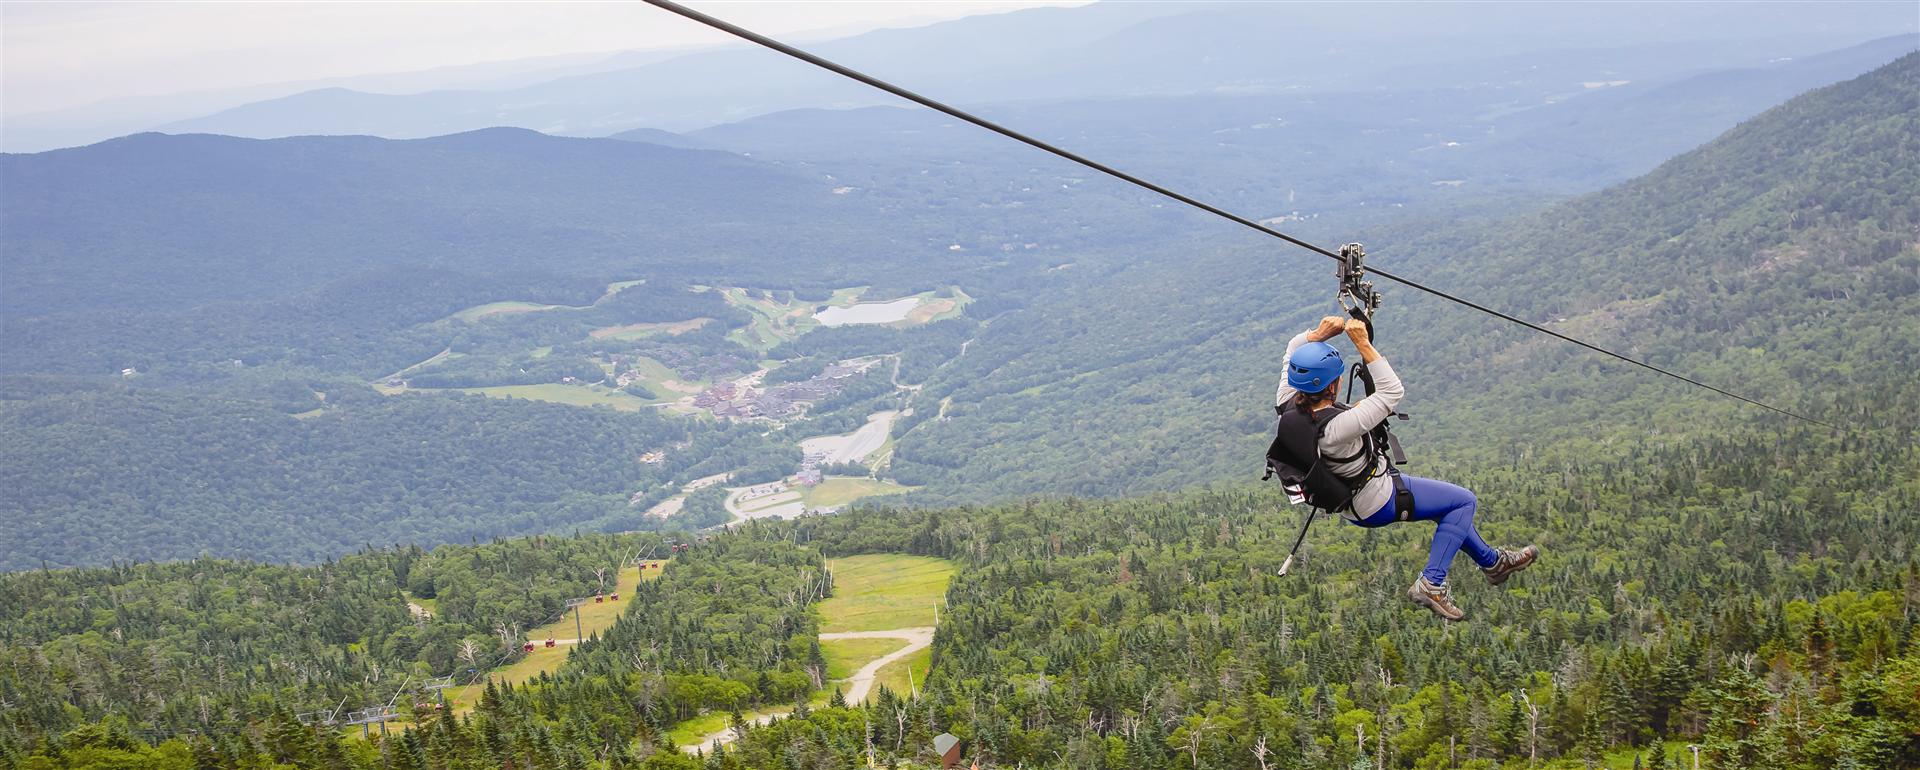 Ziplining in Stowe, VT | Spruce Peak at Stowe | Vermont Zip Line Tours